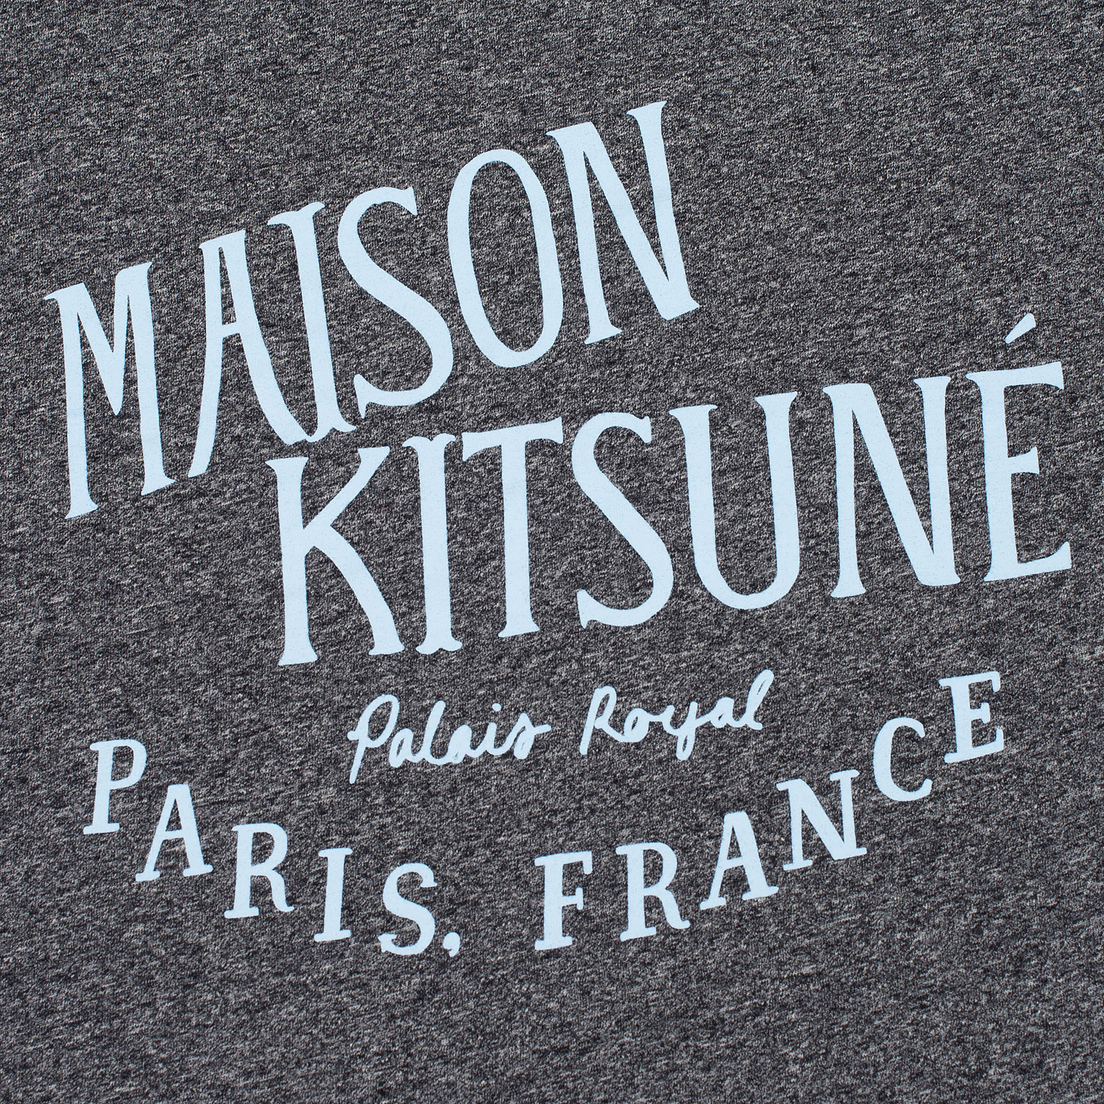 Maison Kitsune Женская футболка Palais Royal